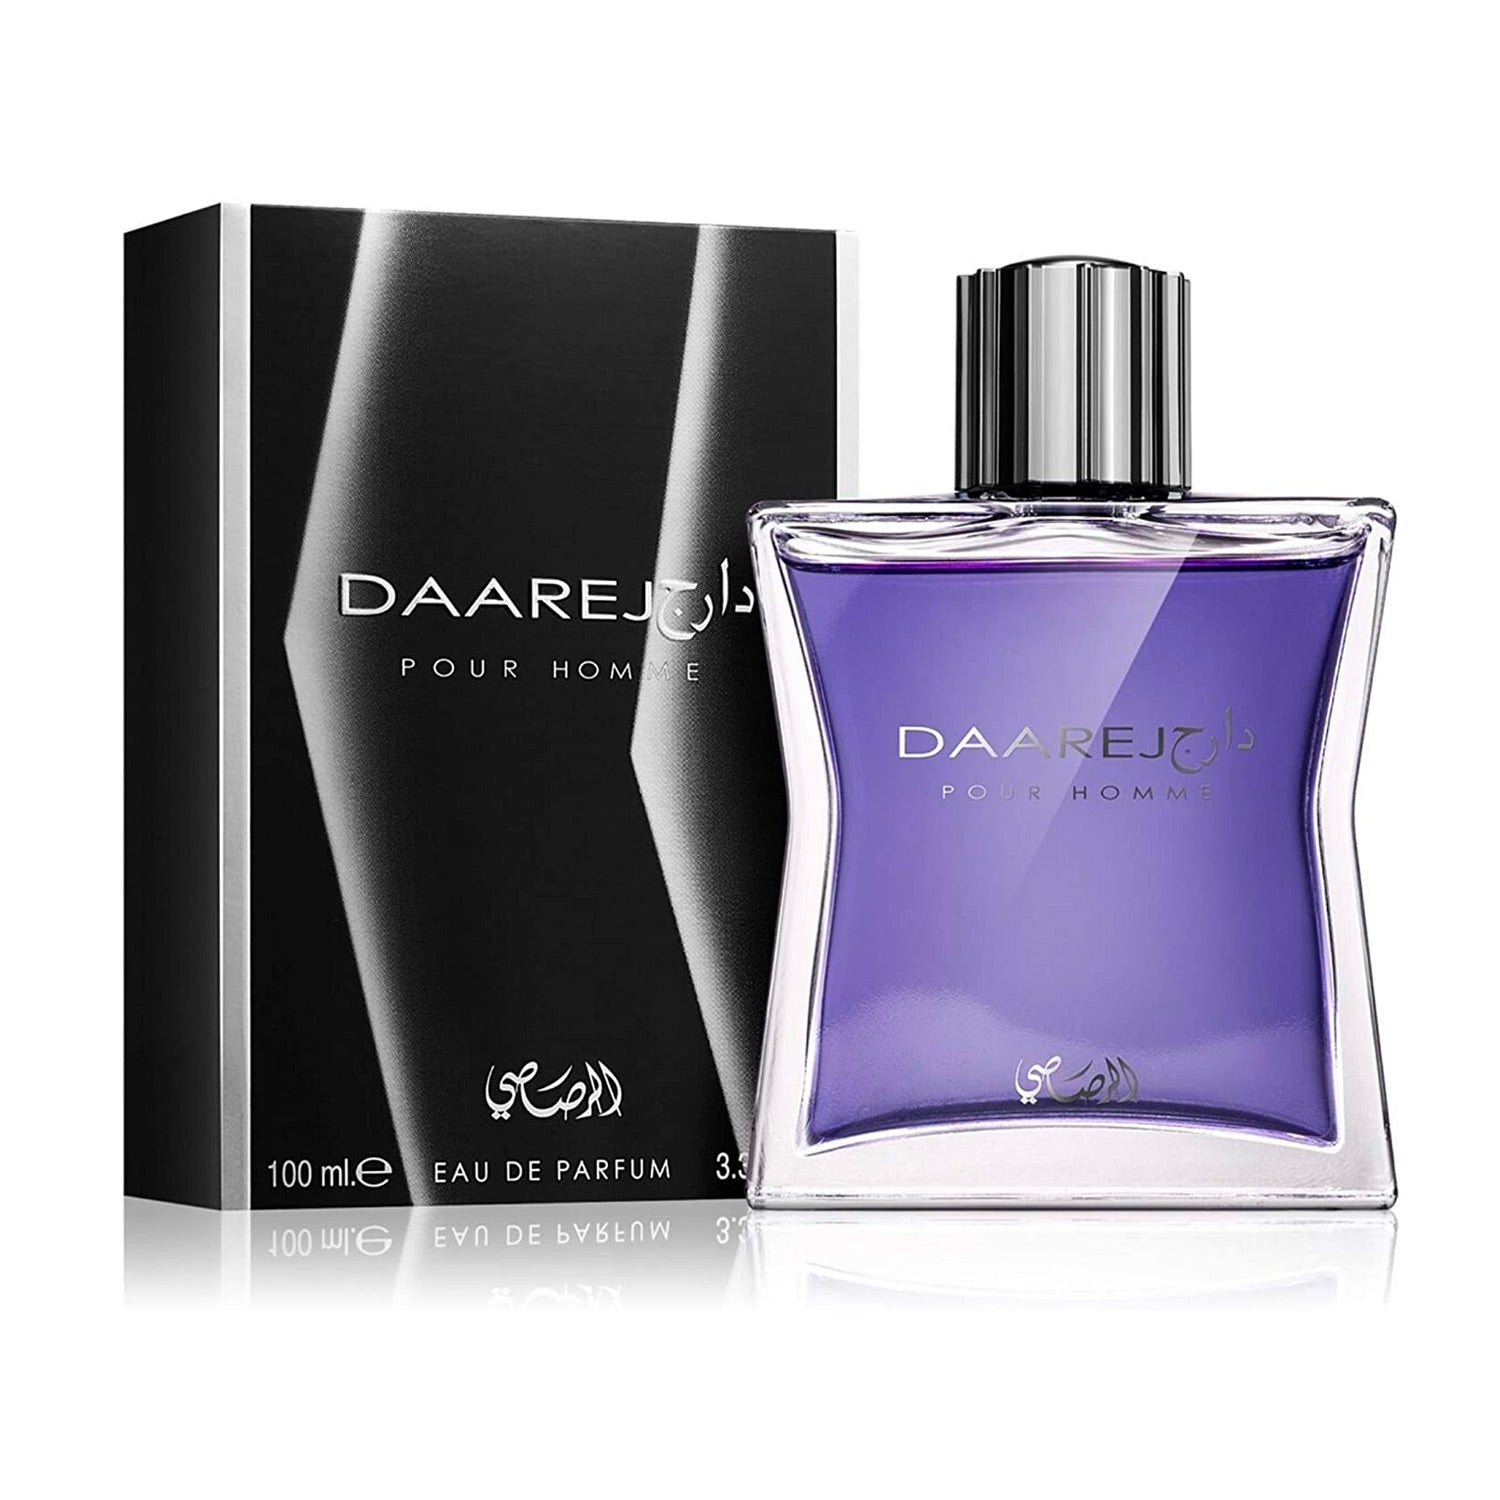 Rasasi Daarej Pour Homme Perfume For Men, Eau de Parfum,100ml - samawa perfumes 